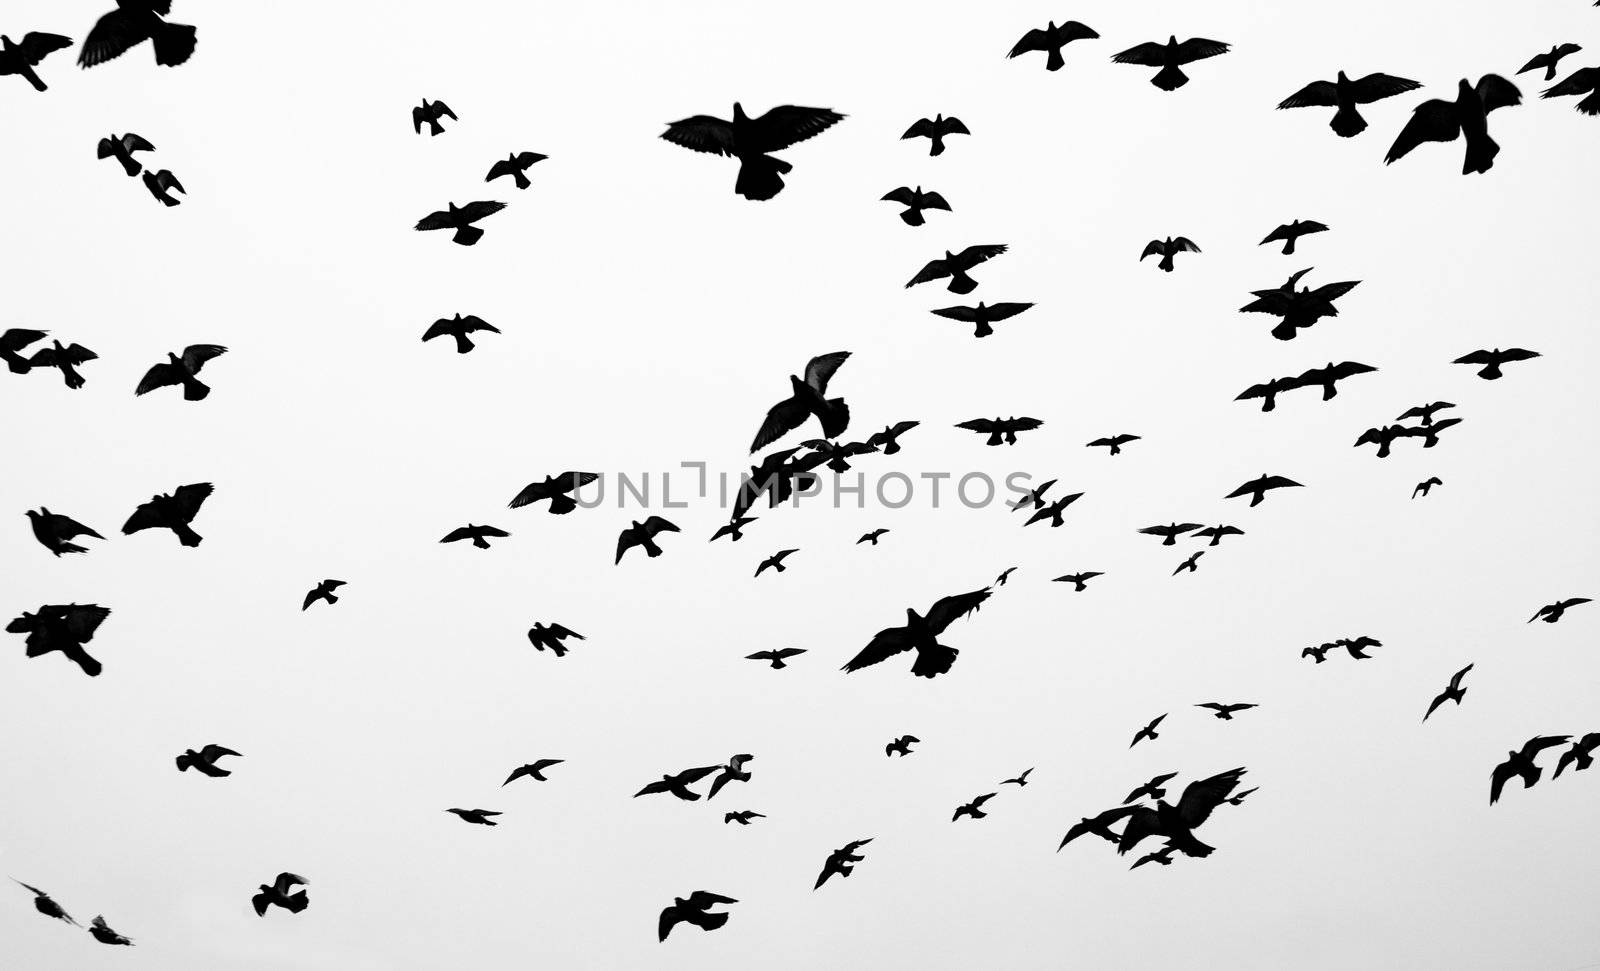 Birds silhouettes by naumoid